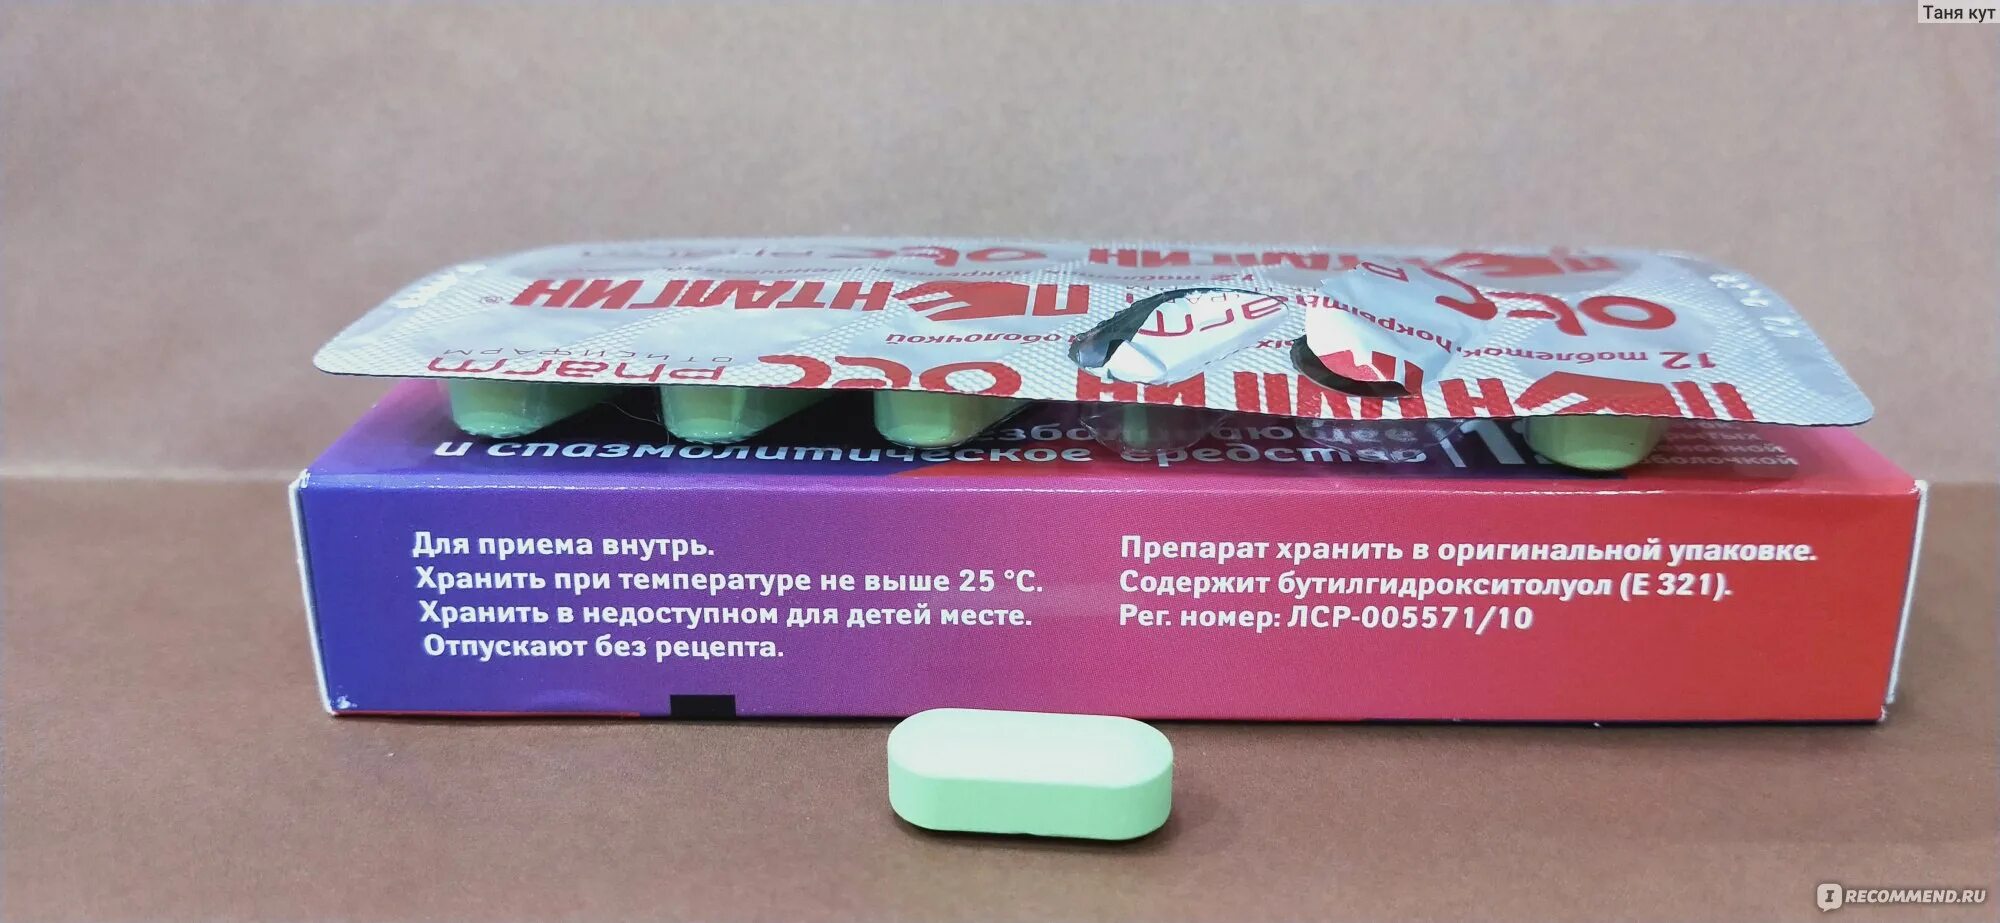 Пенталгин 3 упаковки. Аптека ру Петрозаводск. Пиразидол таблетки. Пиразидол отзывы.